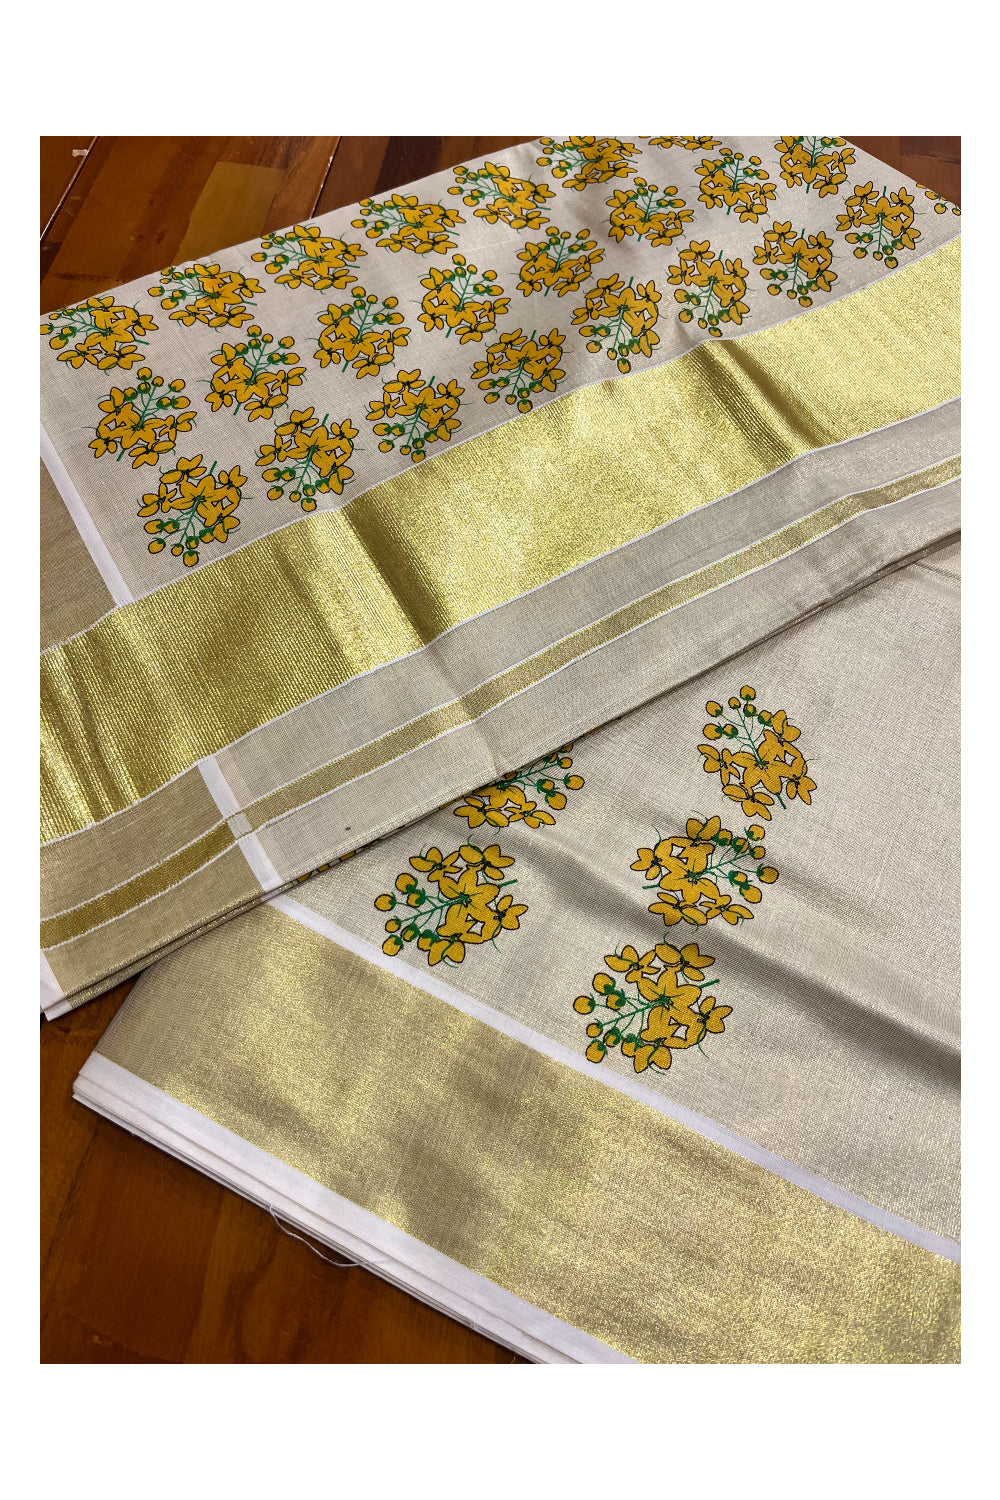 Kerala Tissue Kasavu Saree with Floral Prints on Body and Kasavu Border